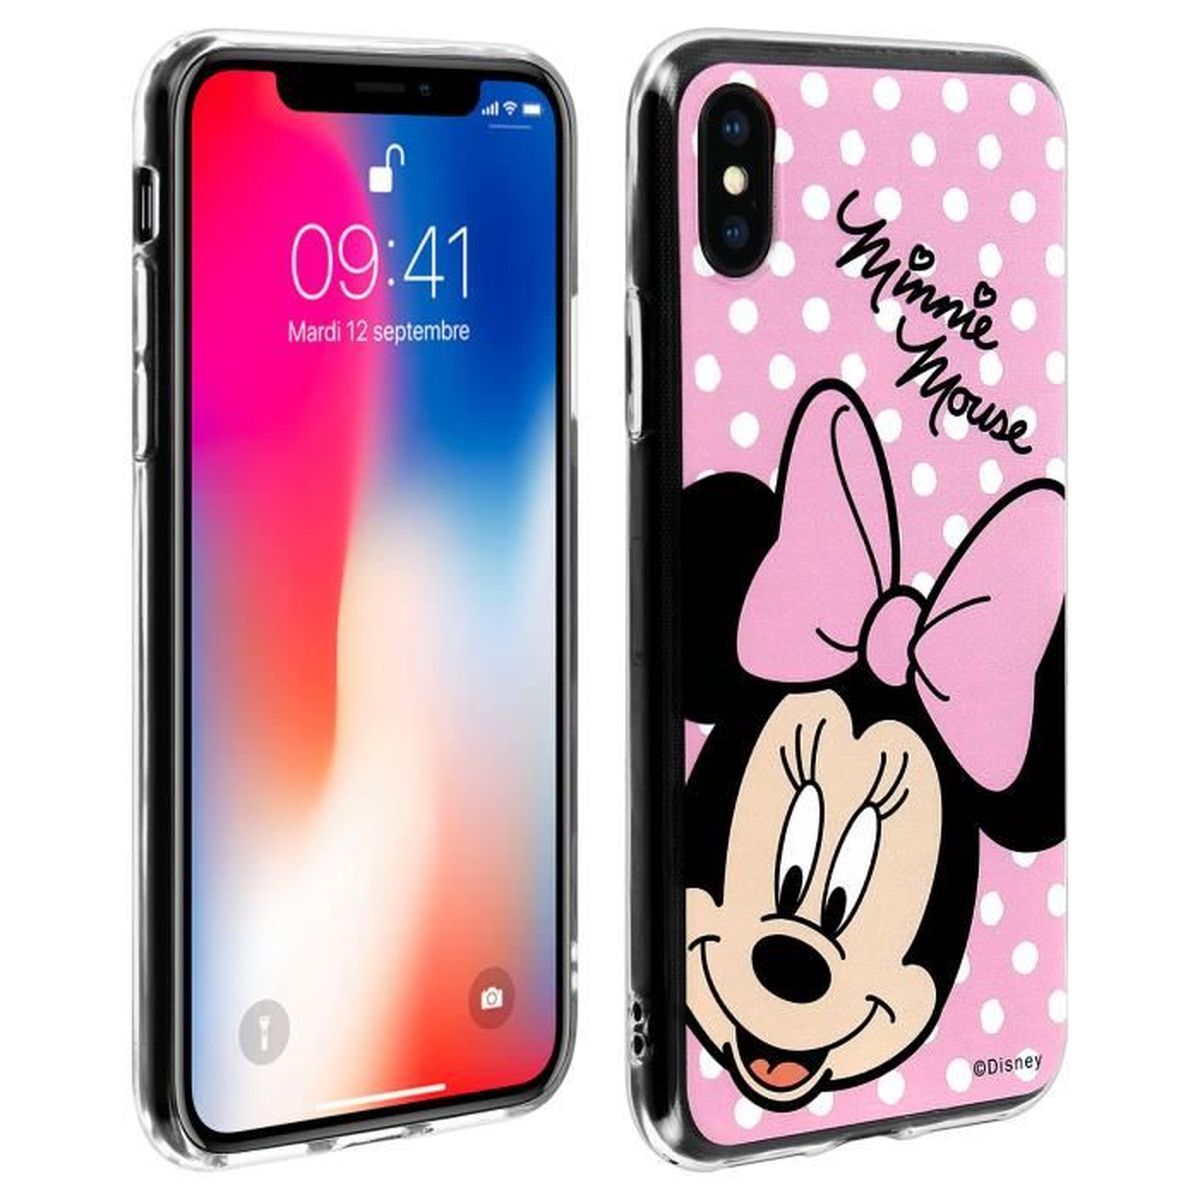 Coque iPhone X et XS Design Minnie/Pois Silicone Ultra-fine Disney ...